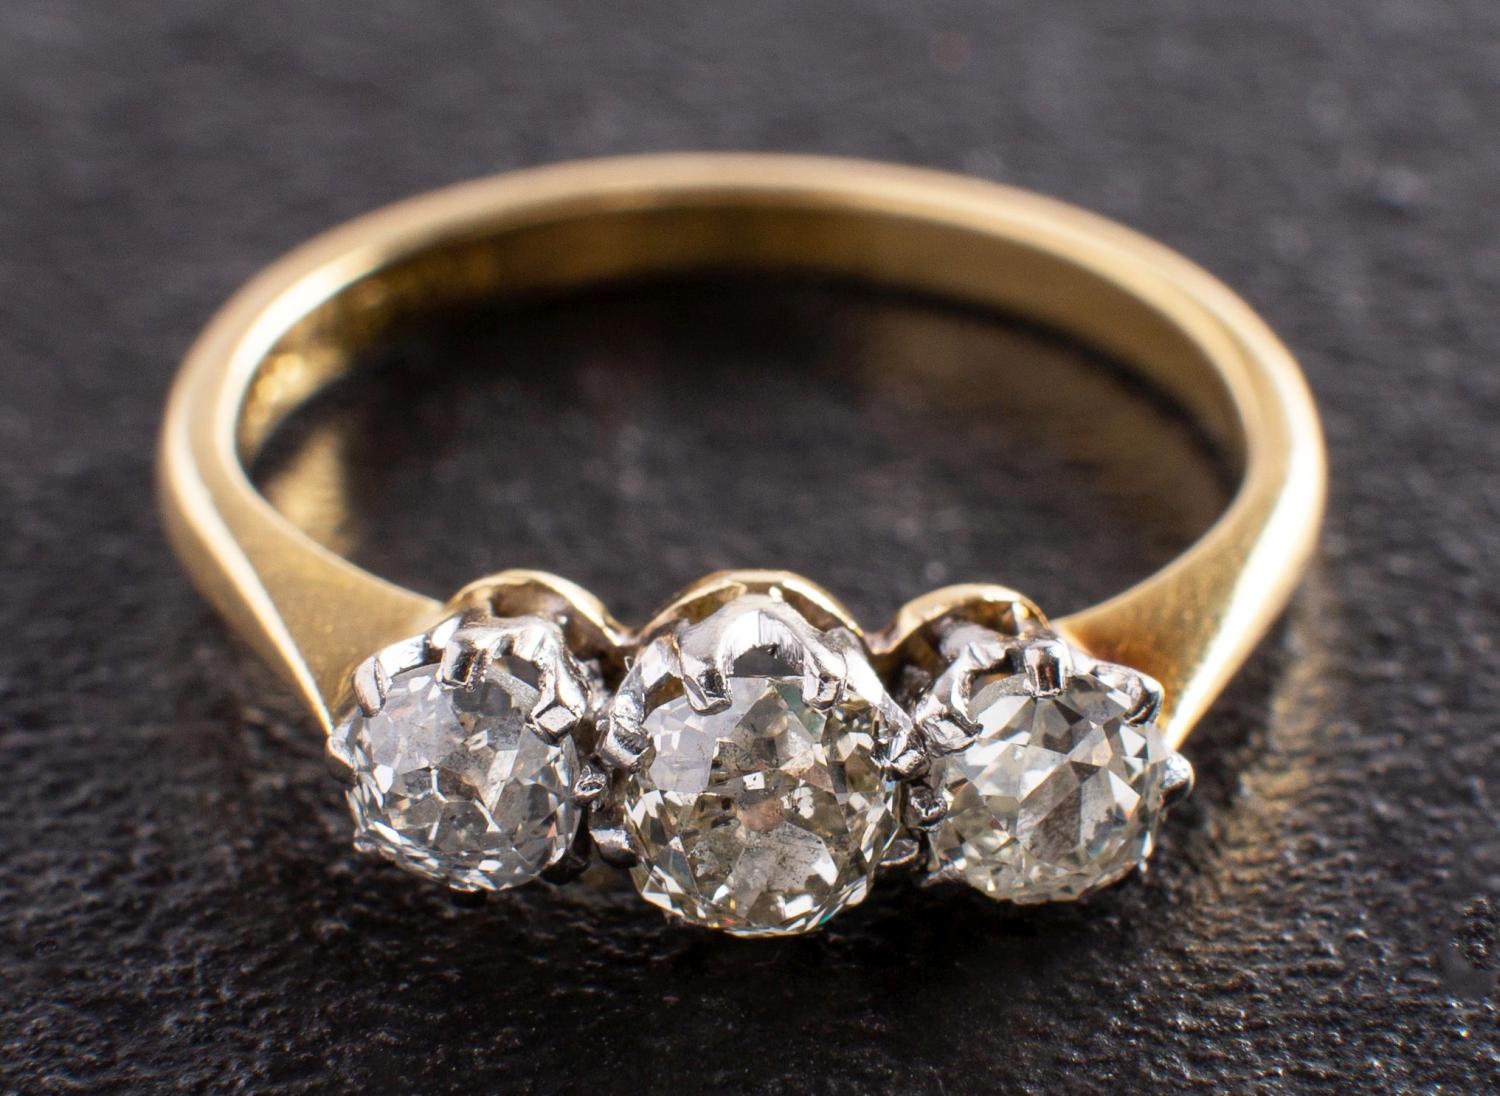 A cushion-cut diamond, three-stone ring, total estimated diamond weight ca. 1.